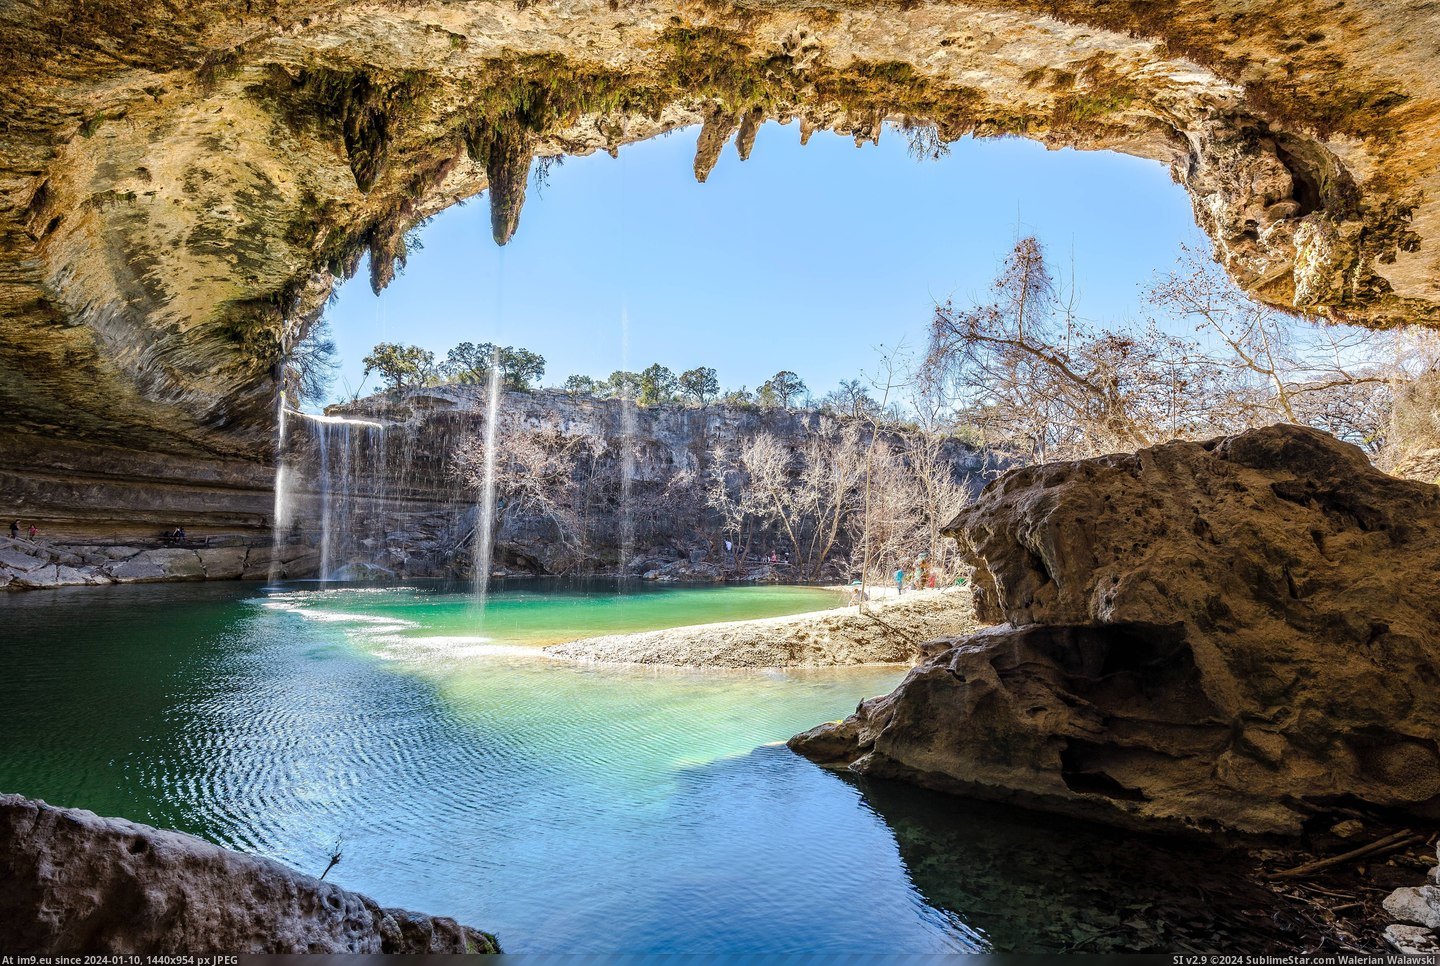 #Pool #Preserve #Hamilton #Austin [Earthporn]  Hamilton Pool Preserve, Austin, TX | 5446x3620 Pic. (Image of album My r/EARTHPORN favs))